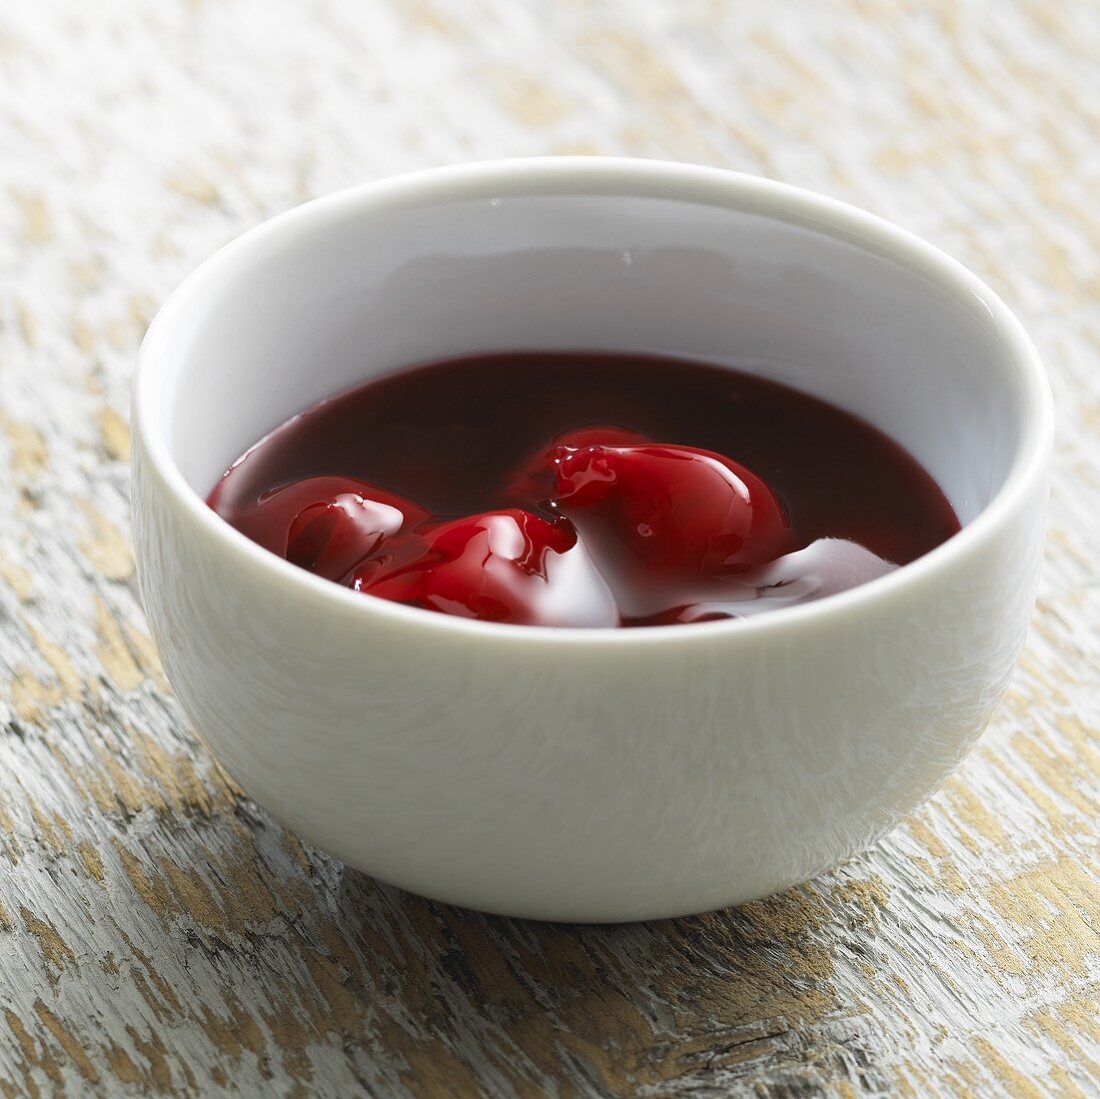 Cherry compote in a ceramic bowl